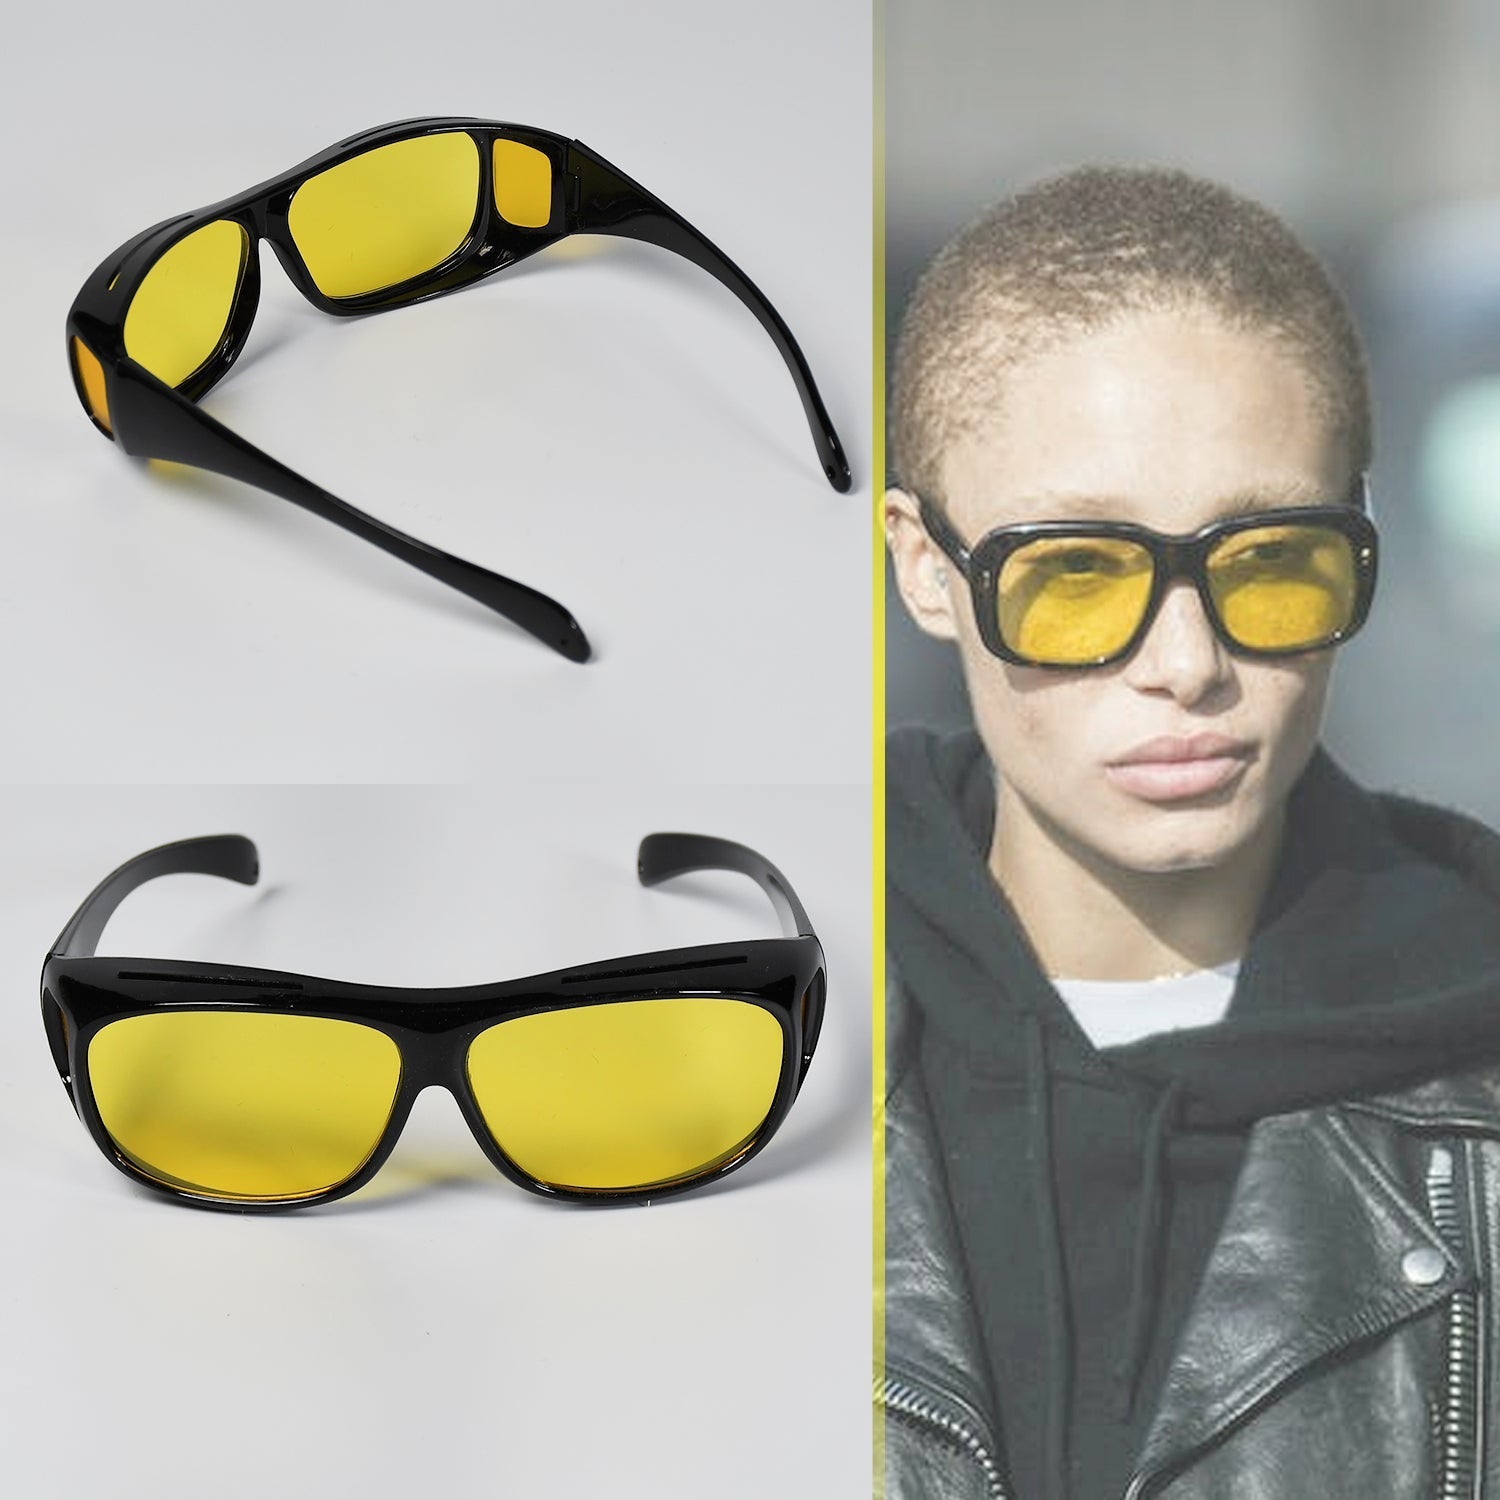 7704  Night Driving Polarized HD Vision Glasses | Anti Glare 100% UV Protected Goggles | Night Bike Riding Car driving Glasses For Men & Women Use DeoDap